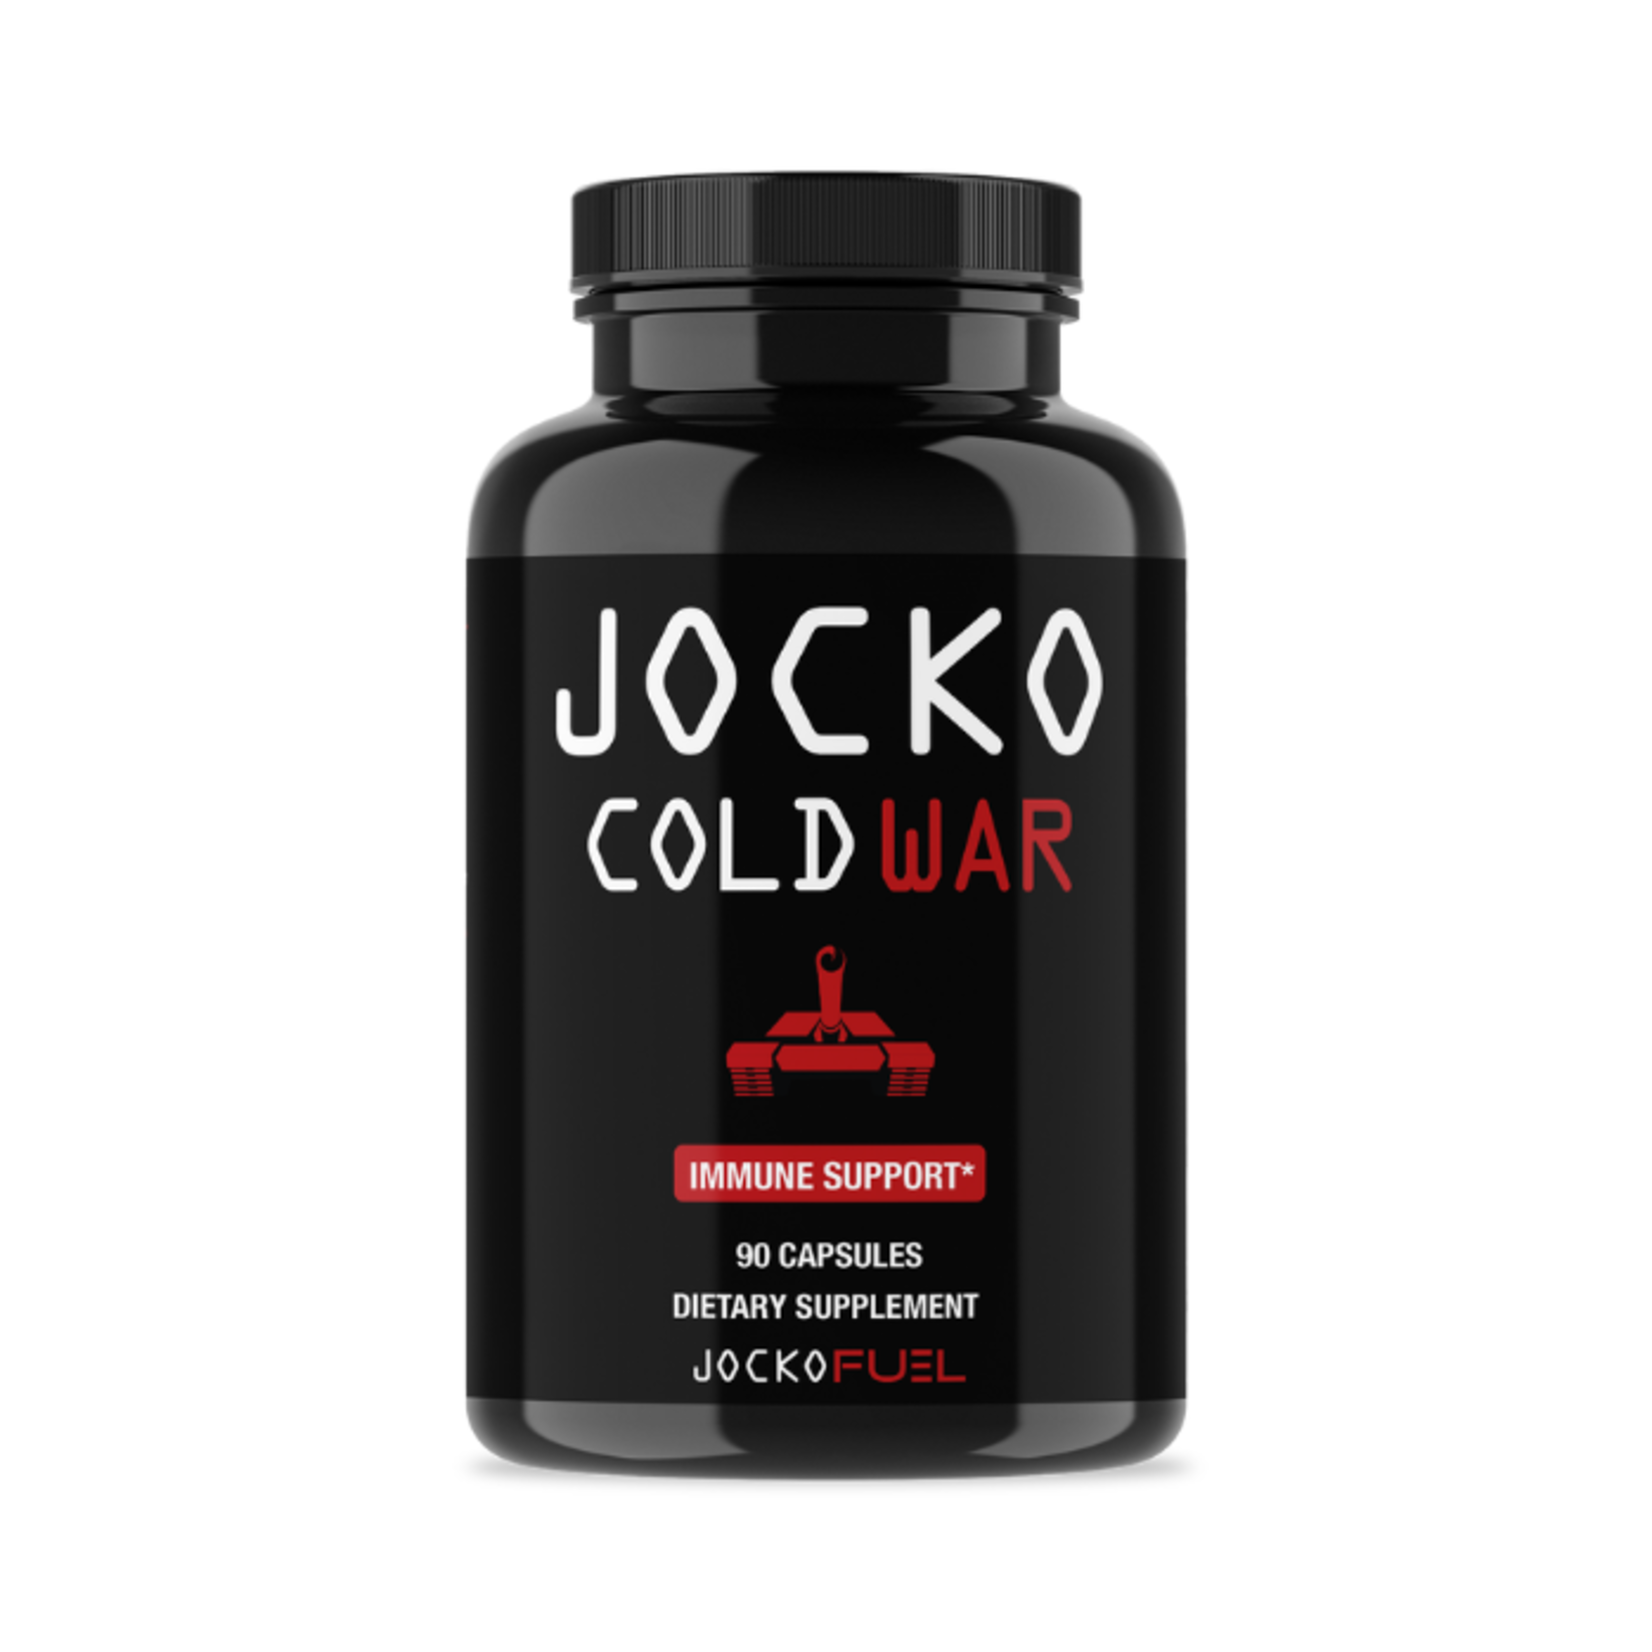 Jocko Jocko Cold War